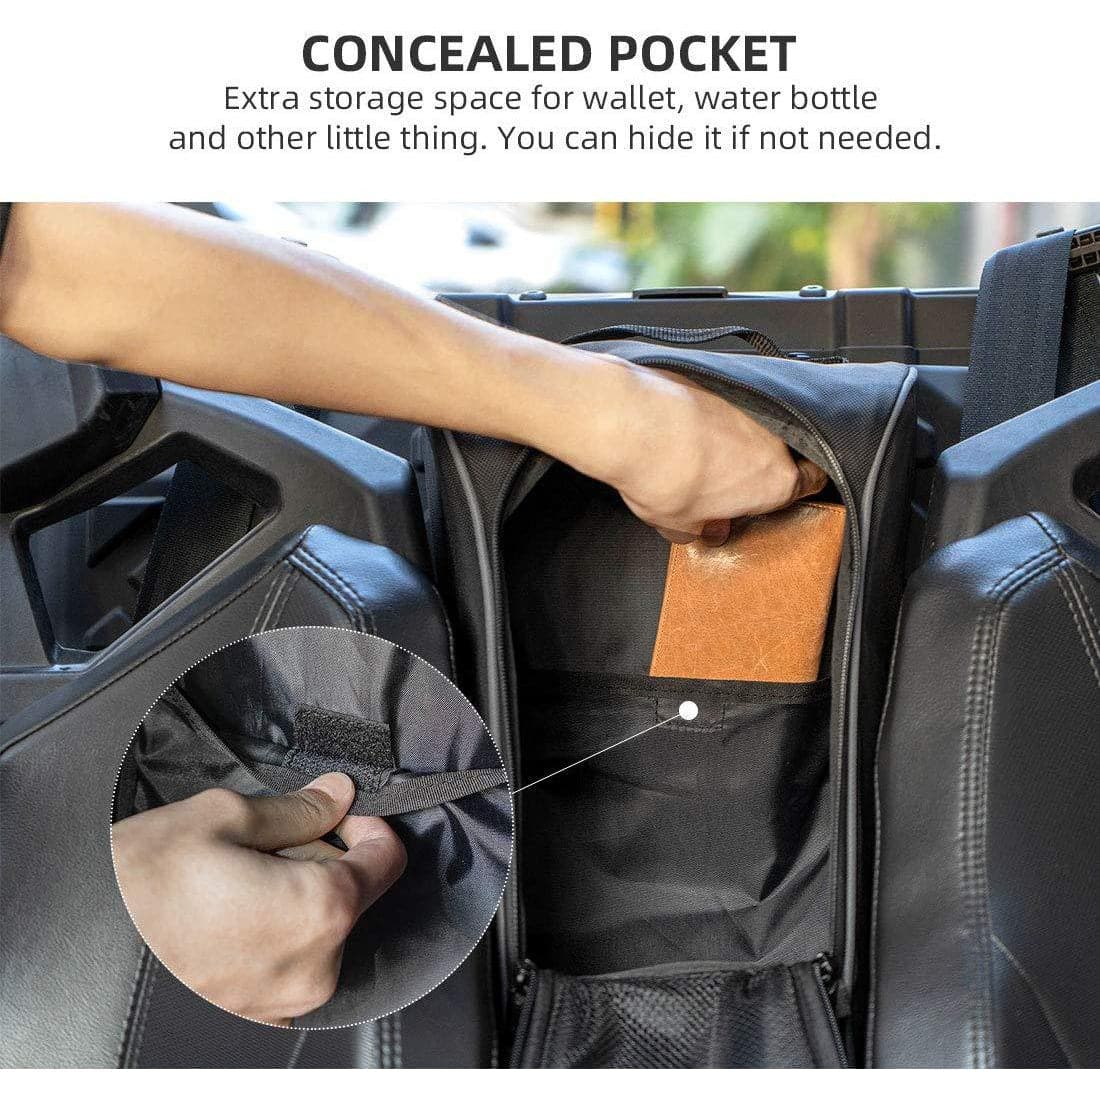 Center Seat Bag Fit RZR PRO XP 2020 – Kemimoto